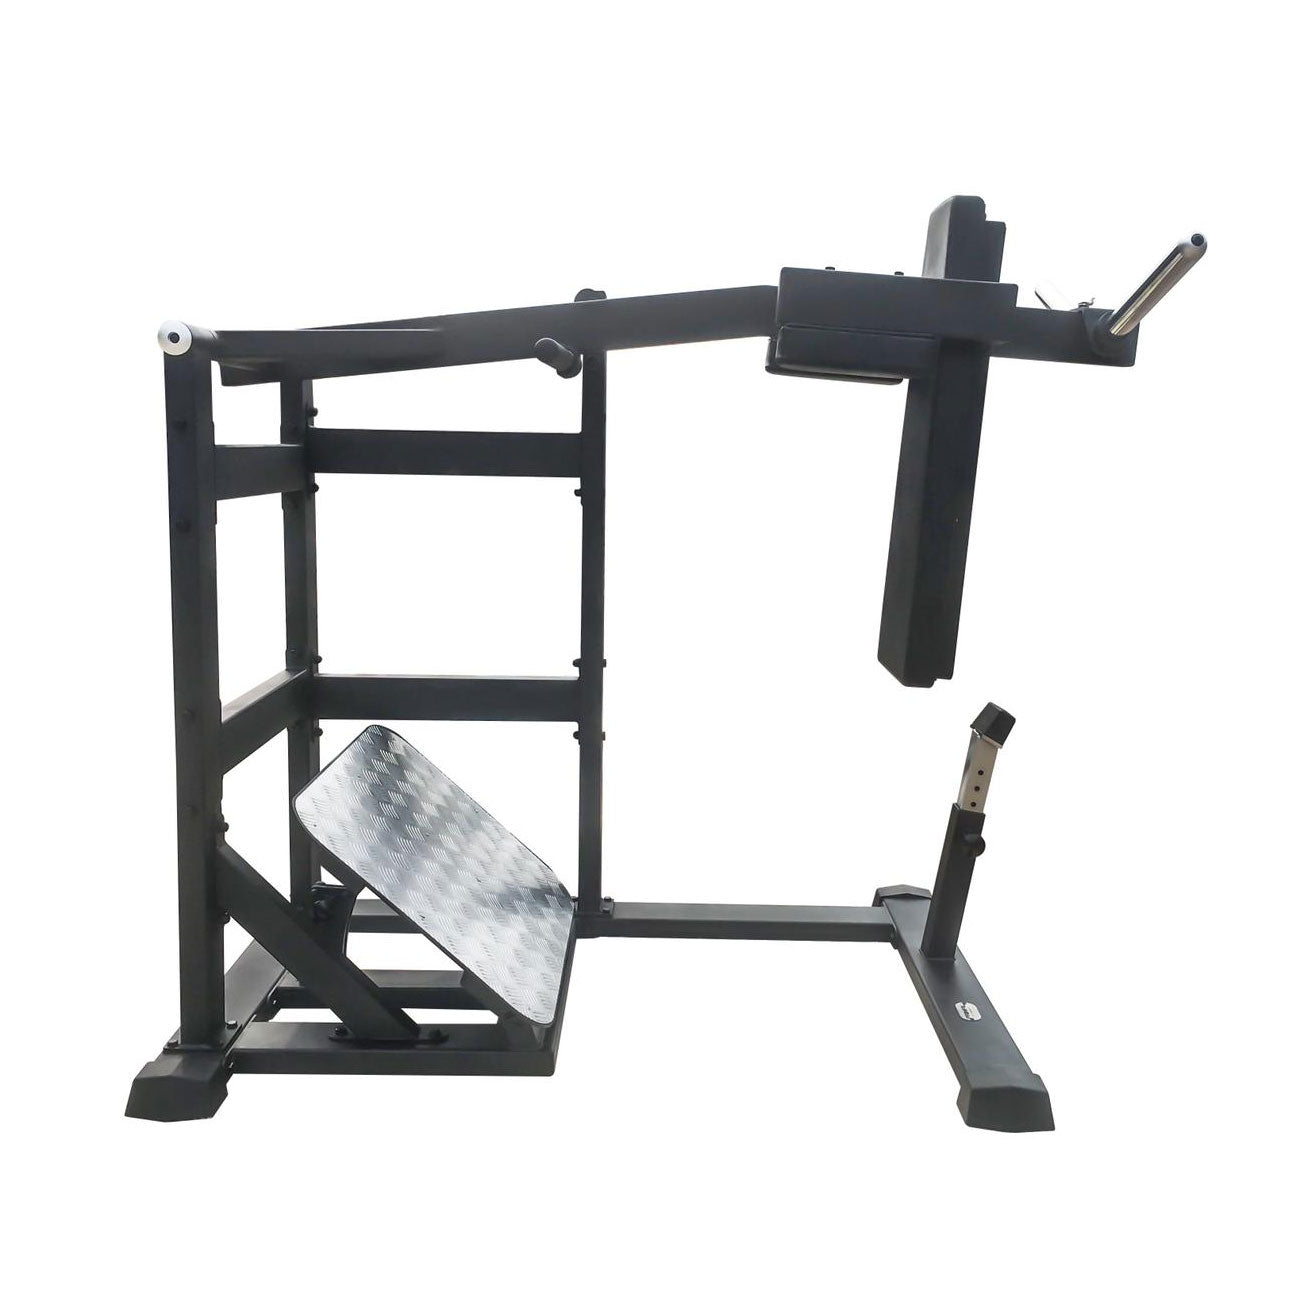 the side of a pendulum squat gym machine